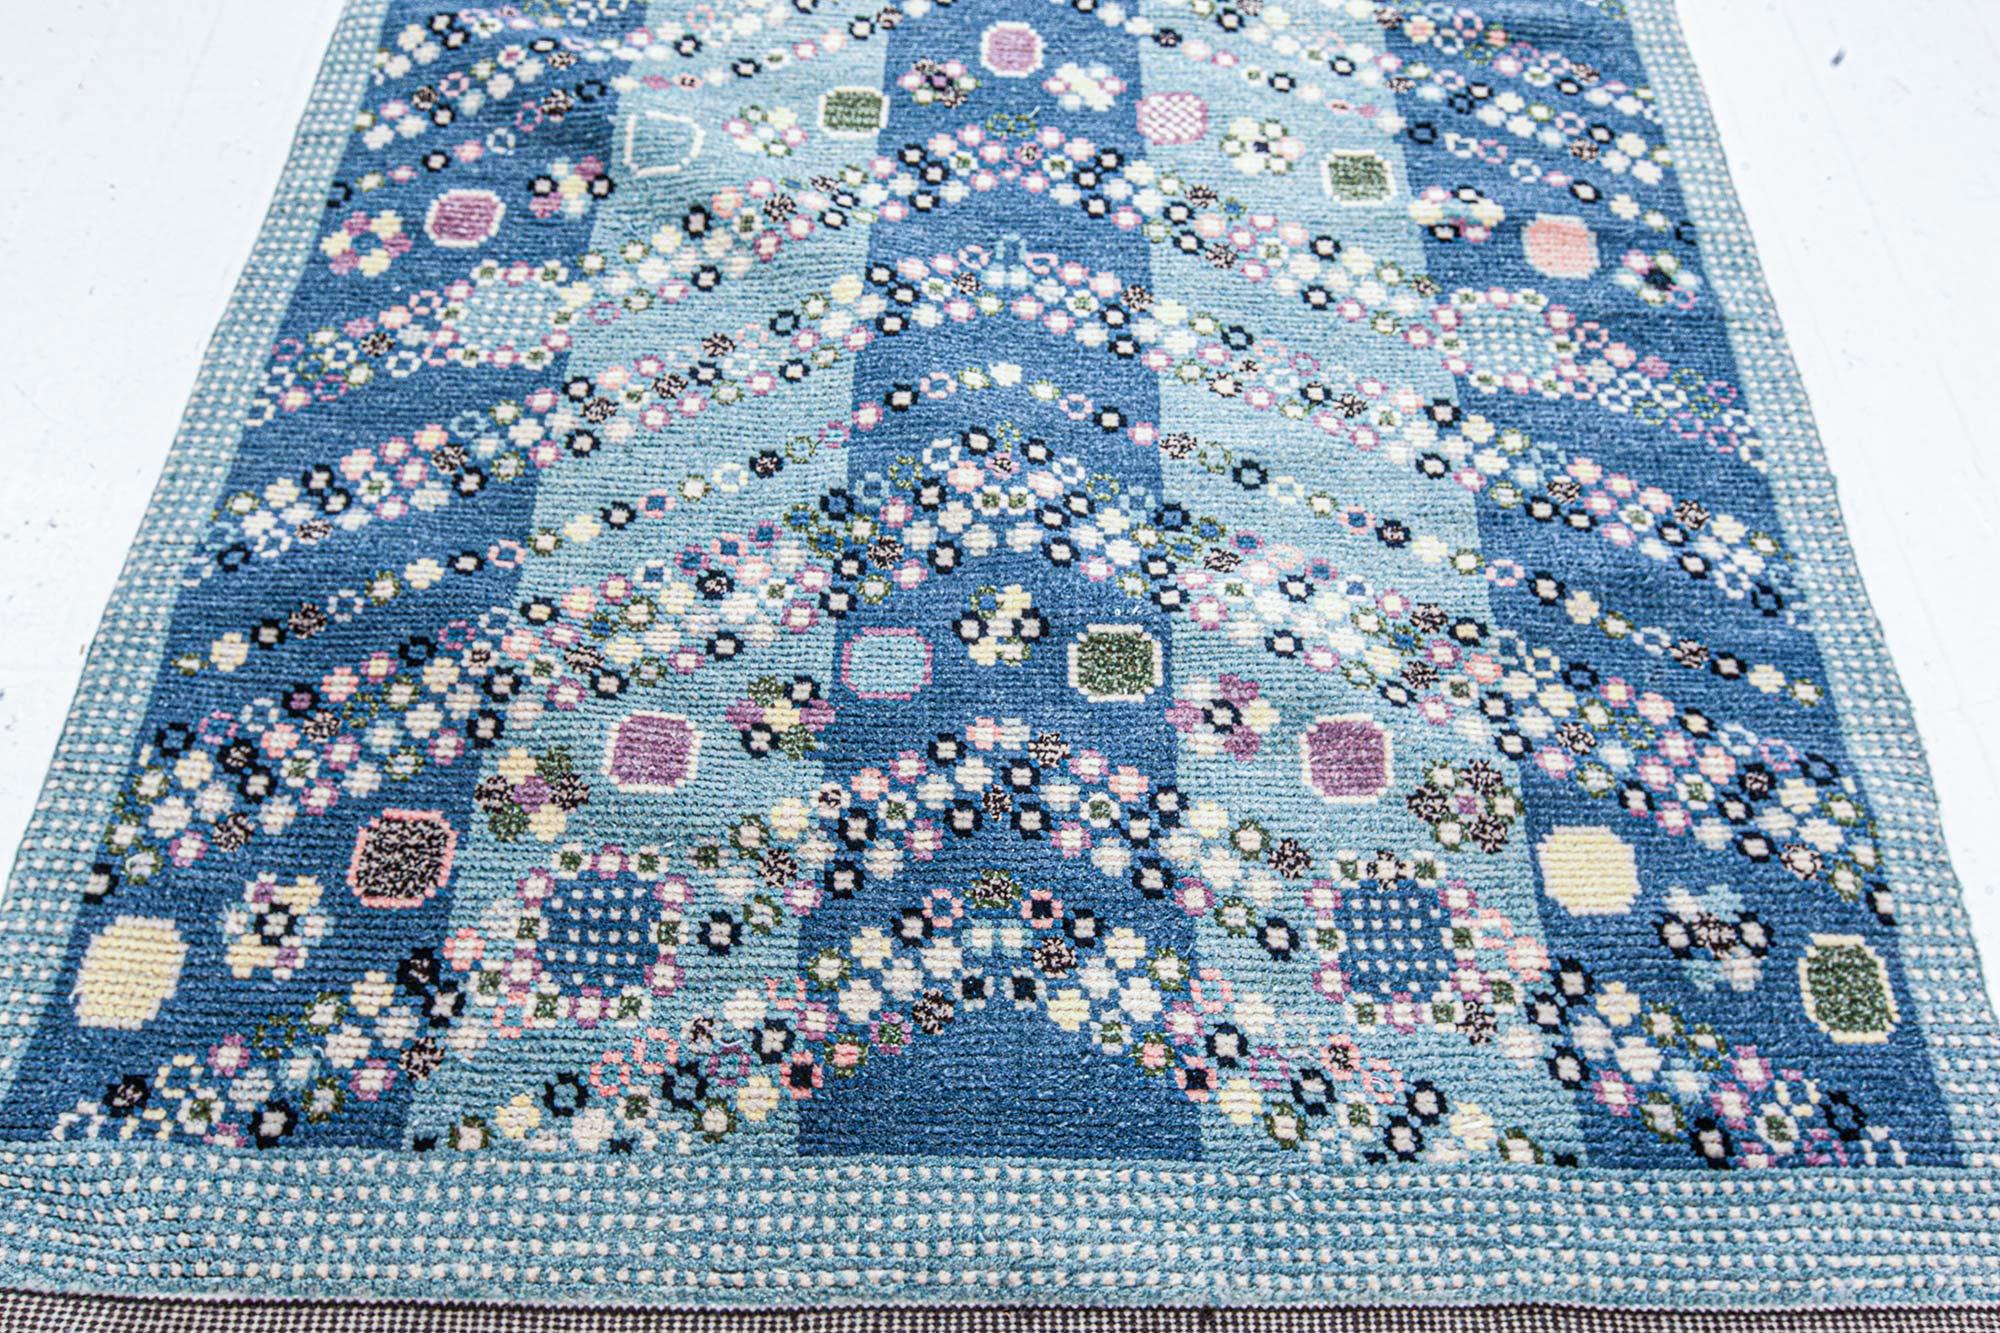 Swedish Rya style rug in Jewel Tones by Doris Leslie Blau
Size: 4'0